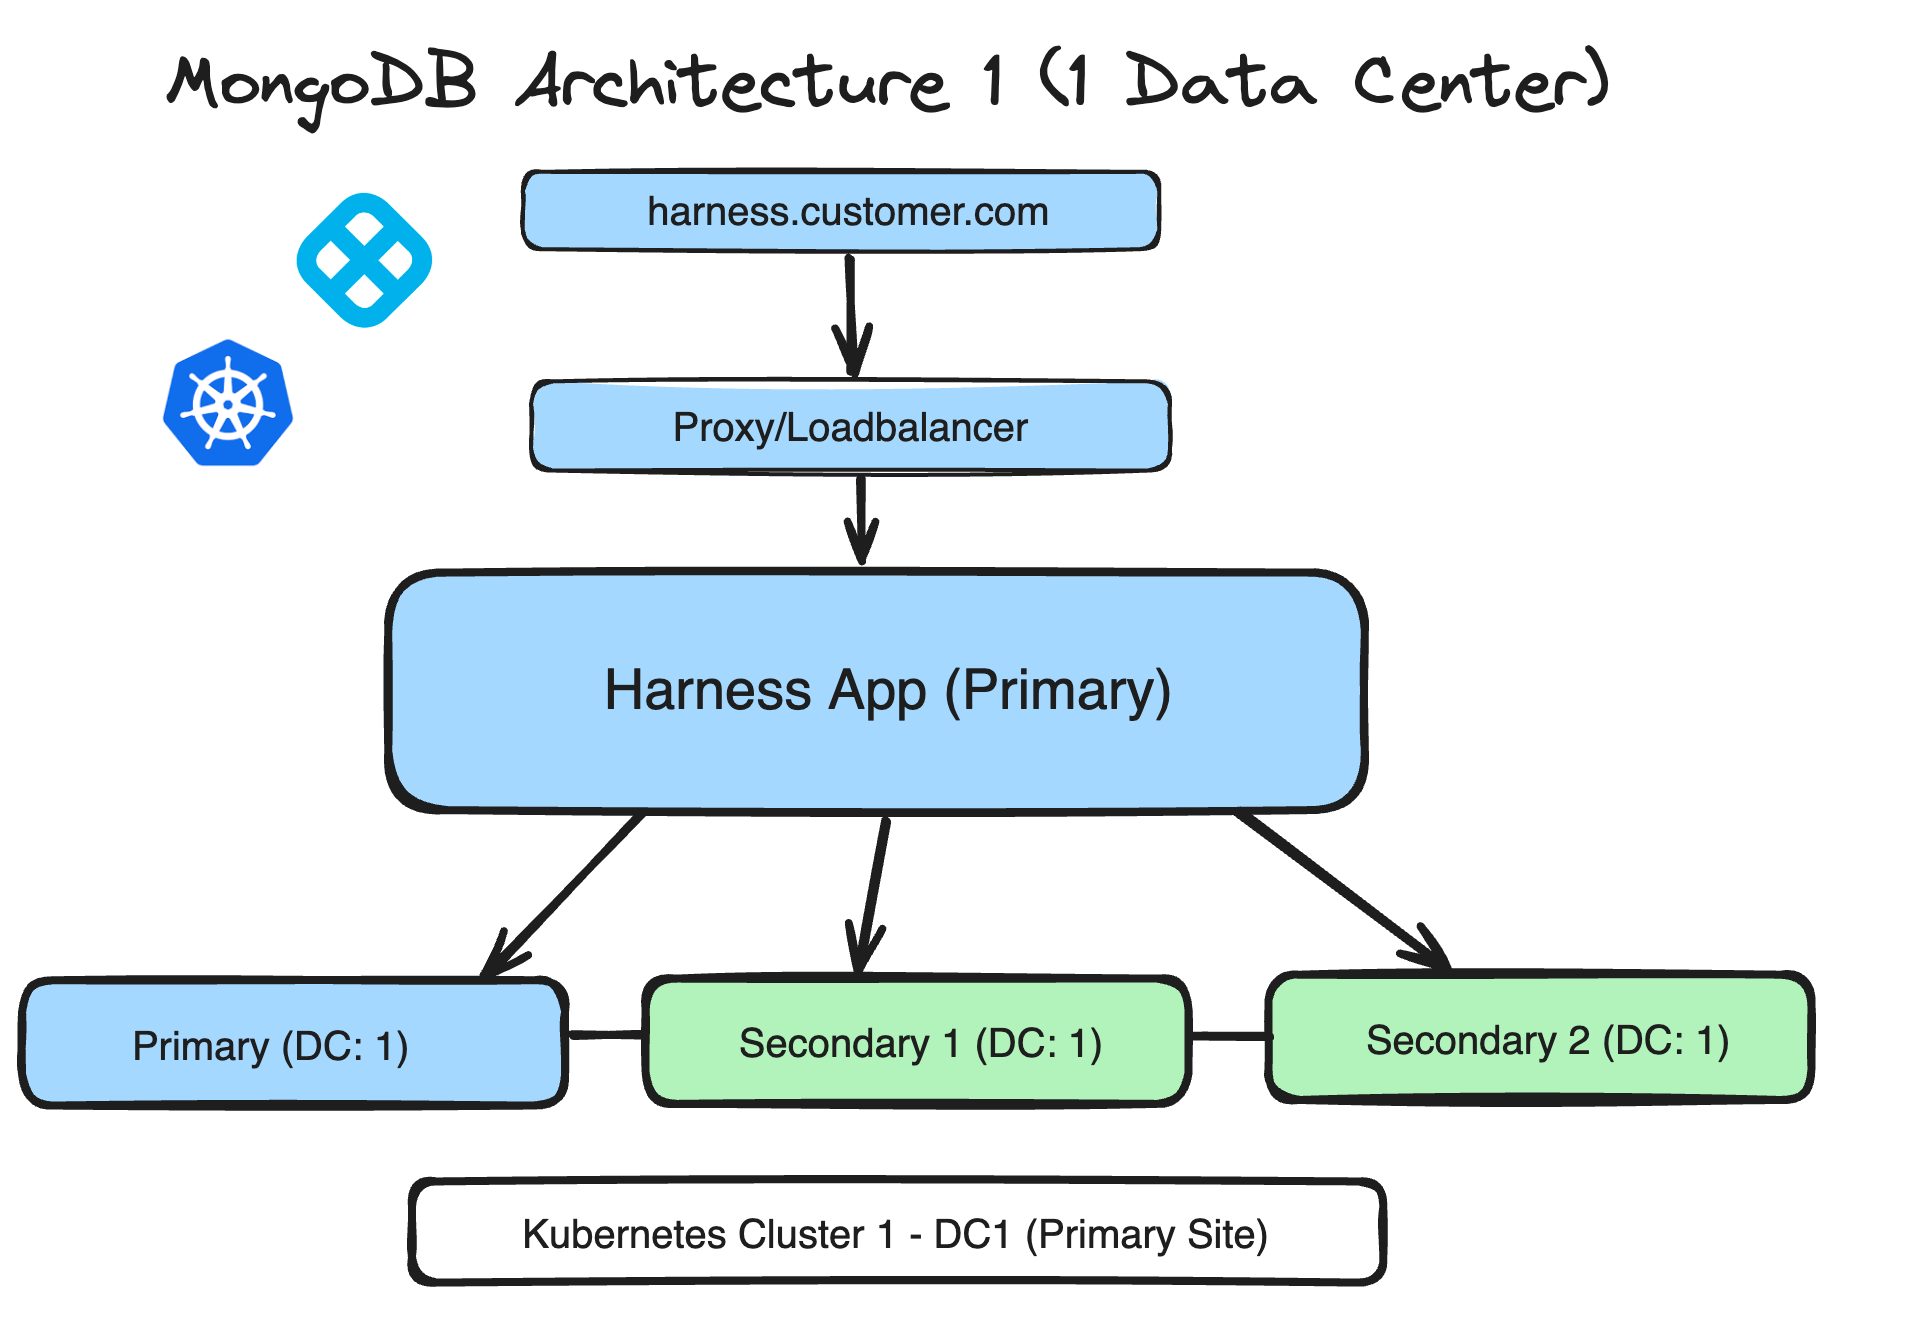 MongoDB architecture 1